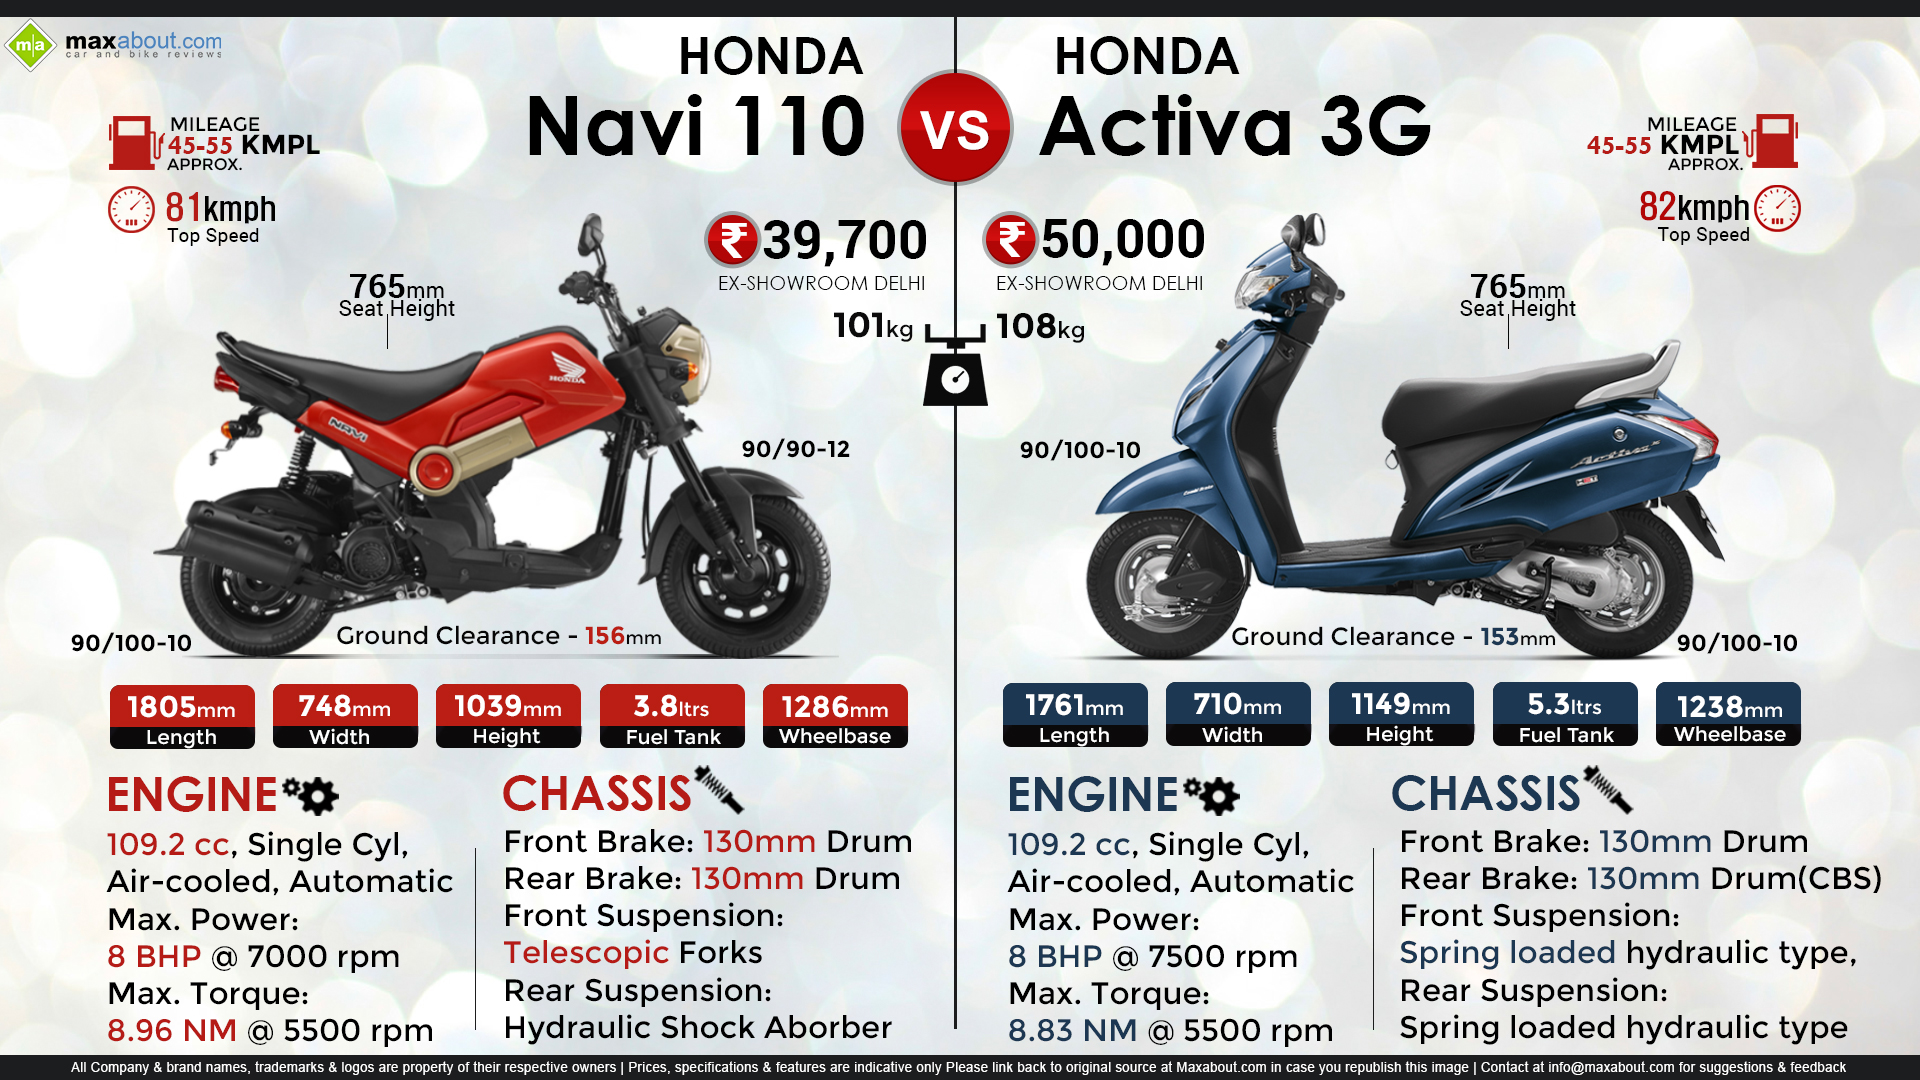 Honda Navi 110 vs. Honda Activa 3G